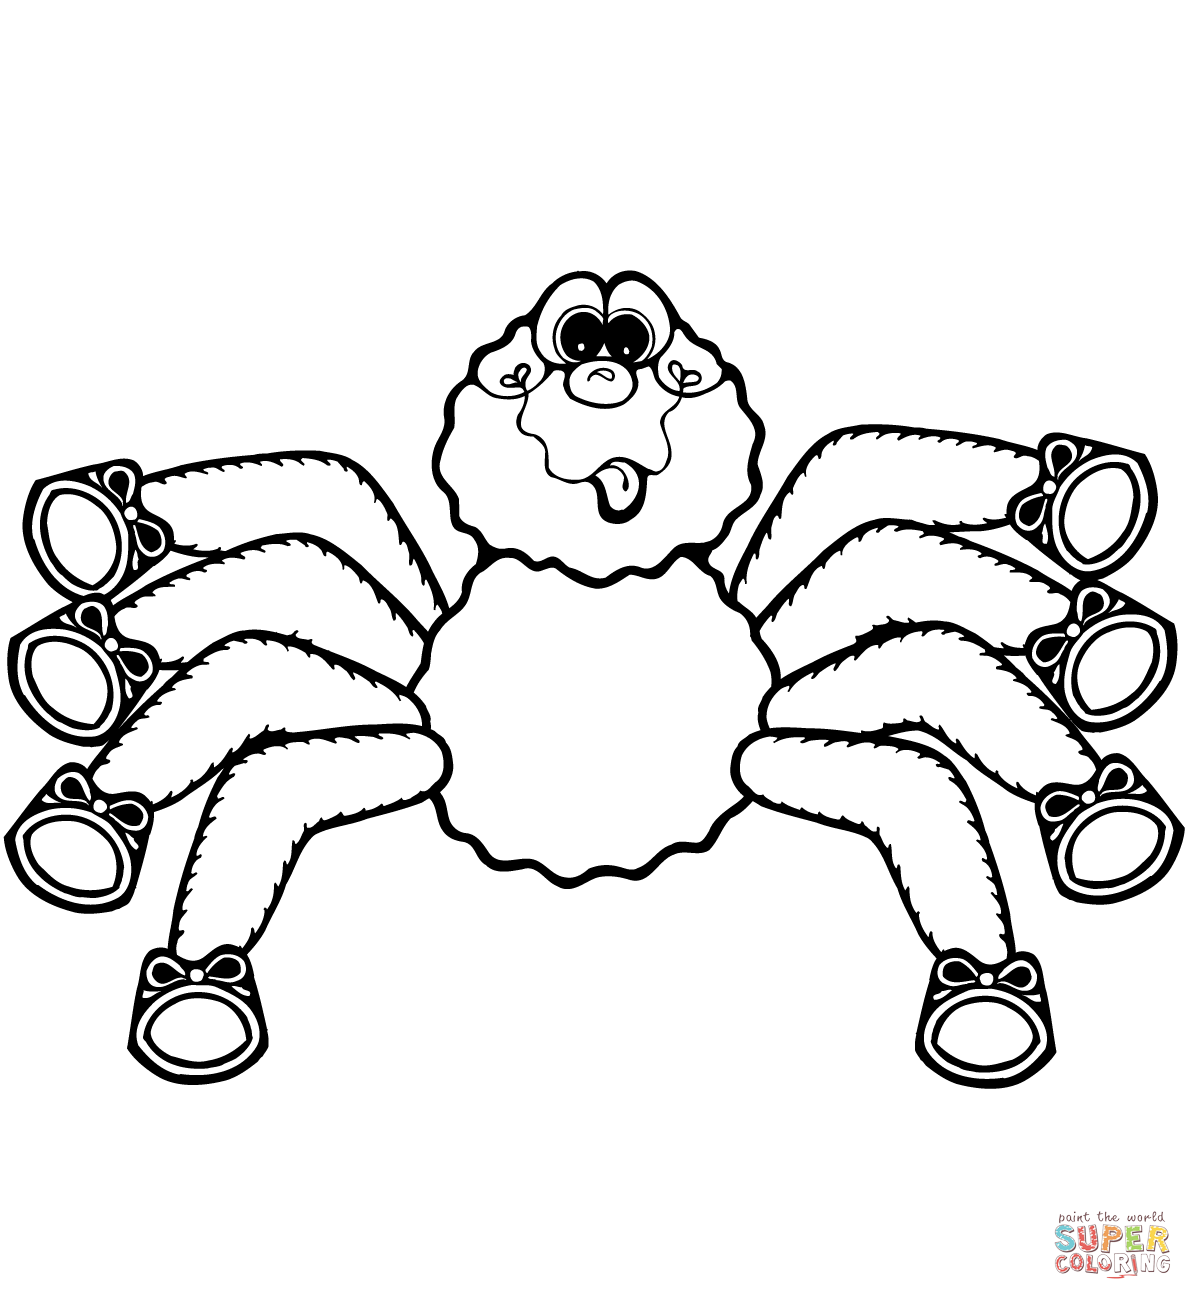 1545183164_cartoon-spider-1-coloring-page